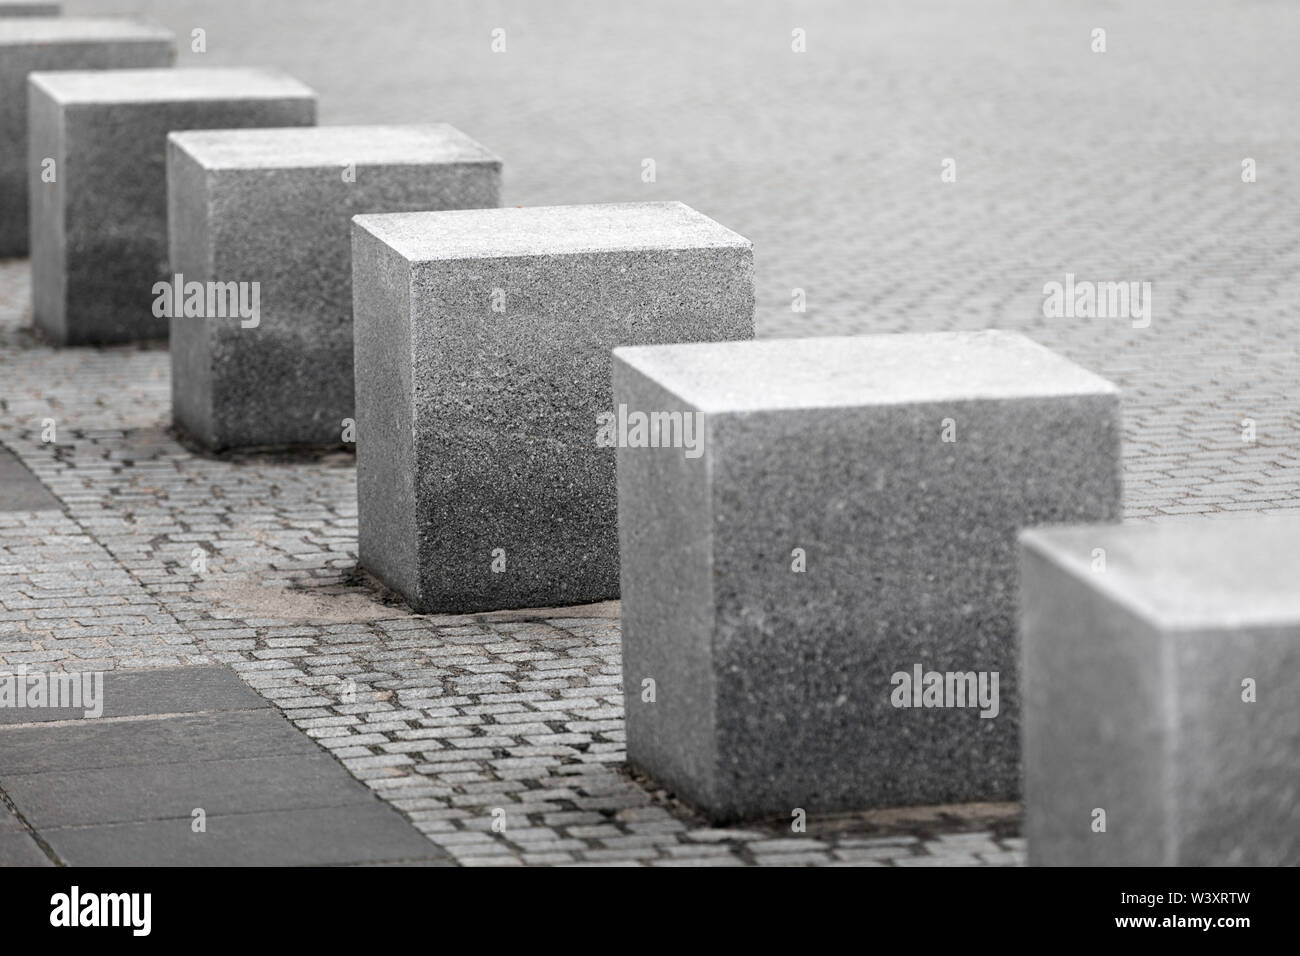 Stone blocks on the city square Stock Photo